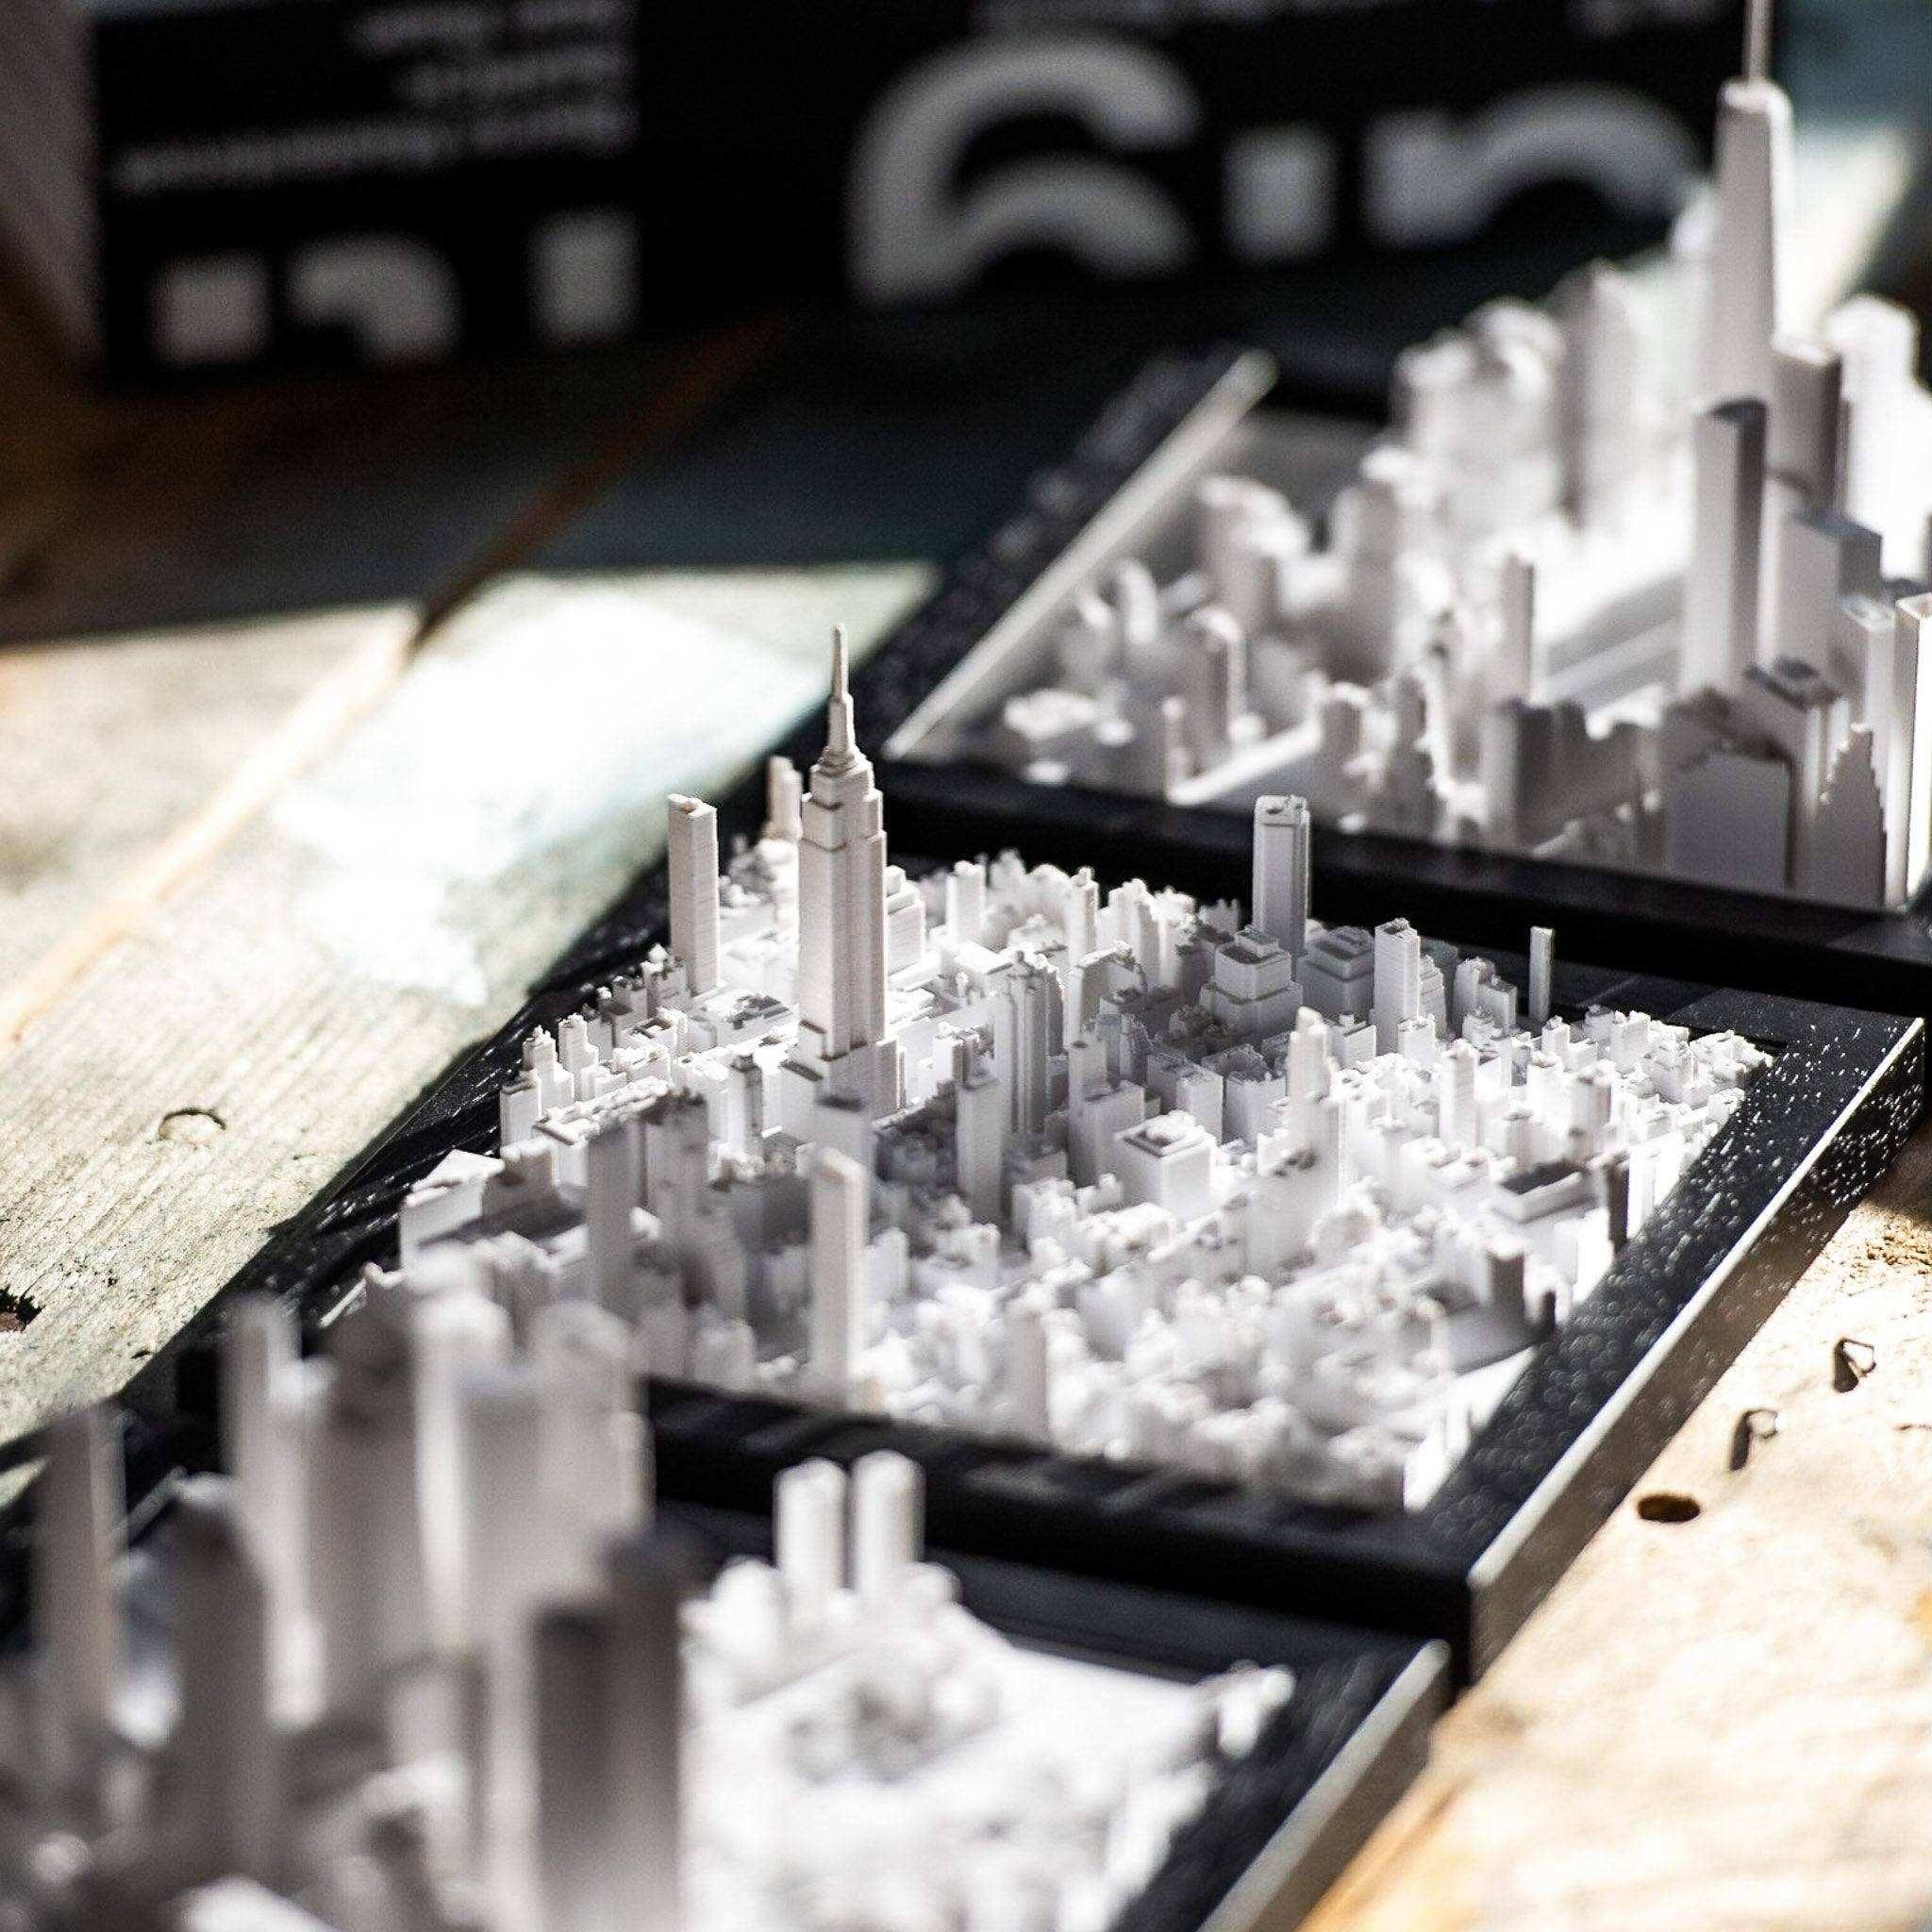 New York 3D City Model America, Cube - CITYFRAMES